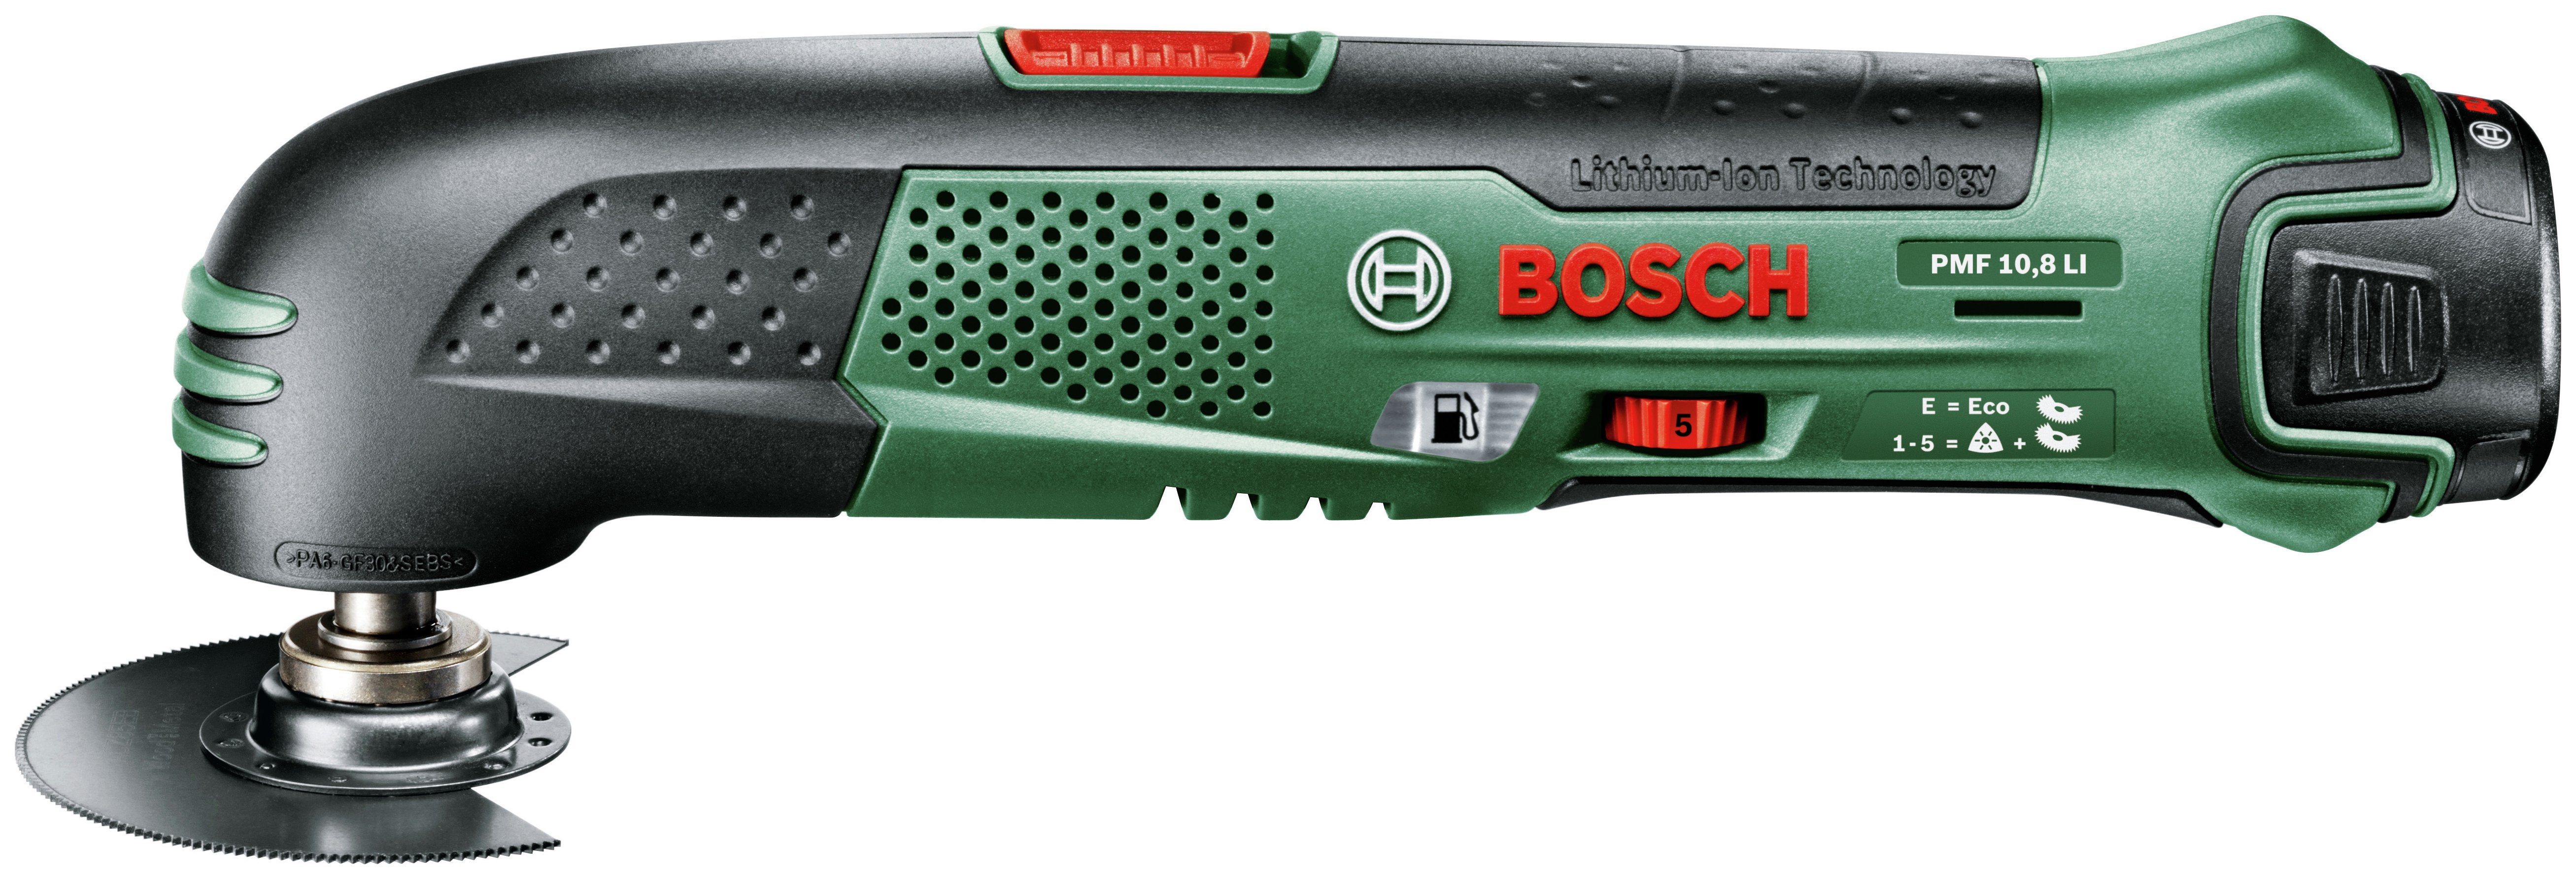 Bosch PMF Cordless Multi Tool